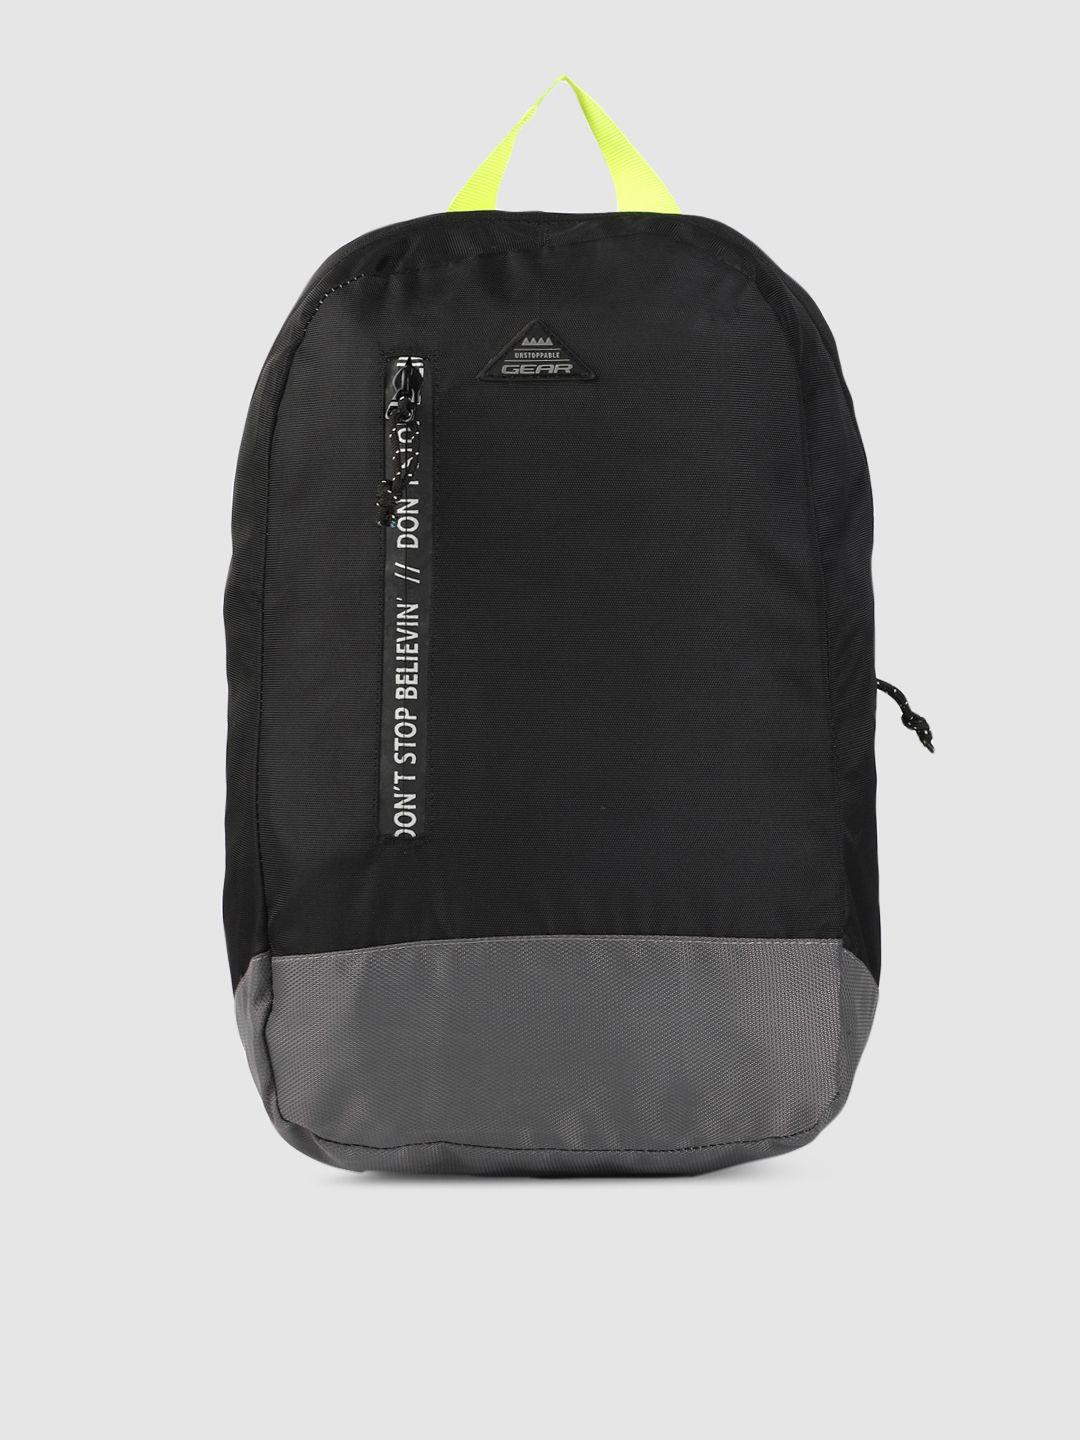 gear unisex black & grey colourblocked superior backpack